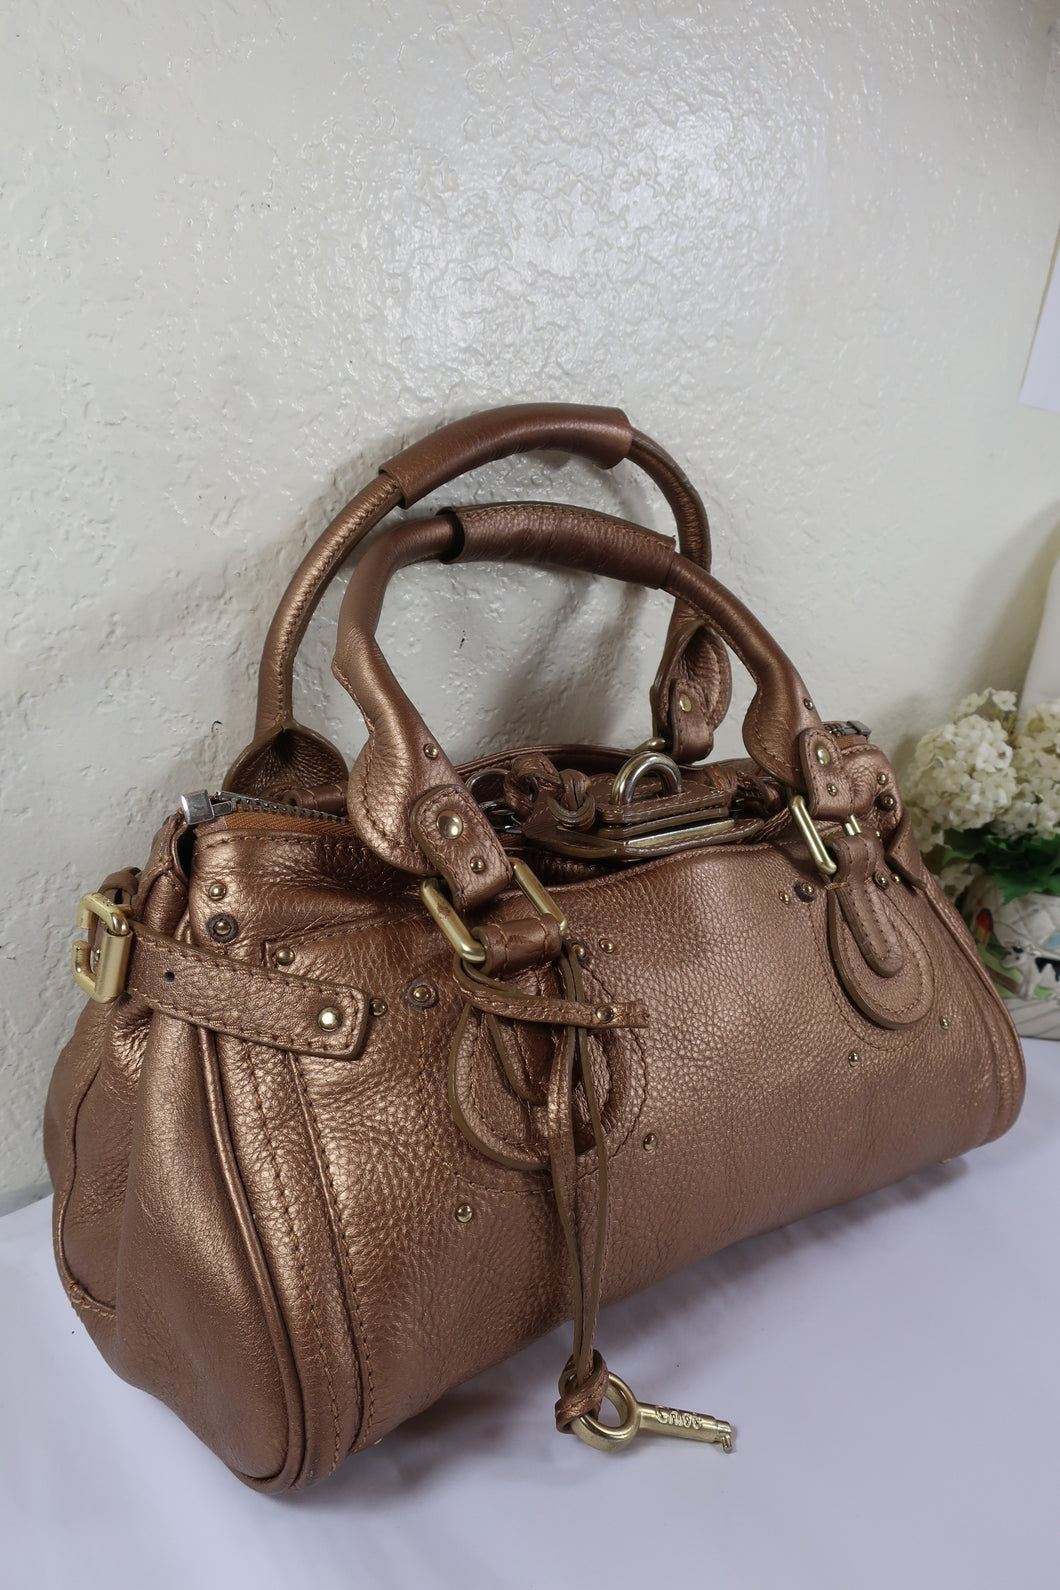 CHLOE Paddington Bronze Leather Shoulder Bag Hand Bag Handbag